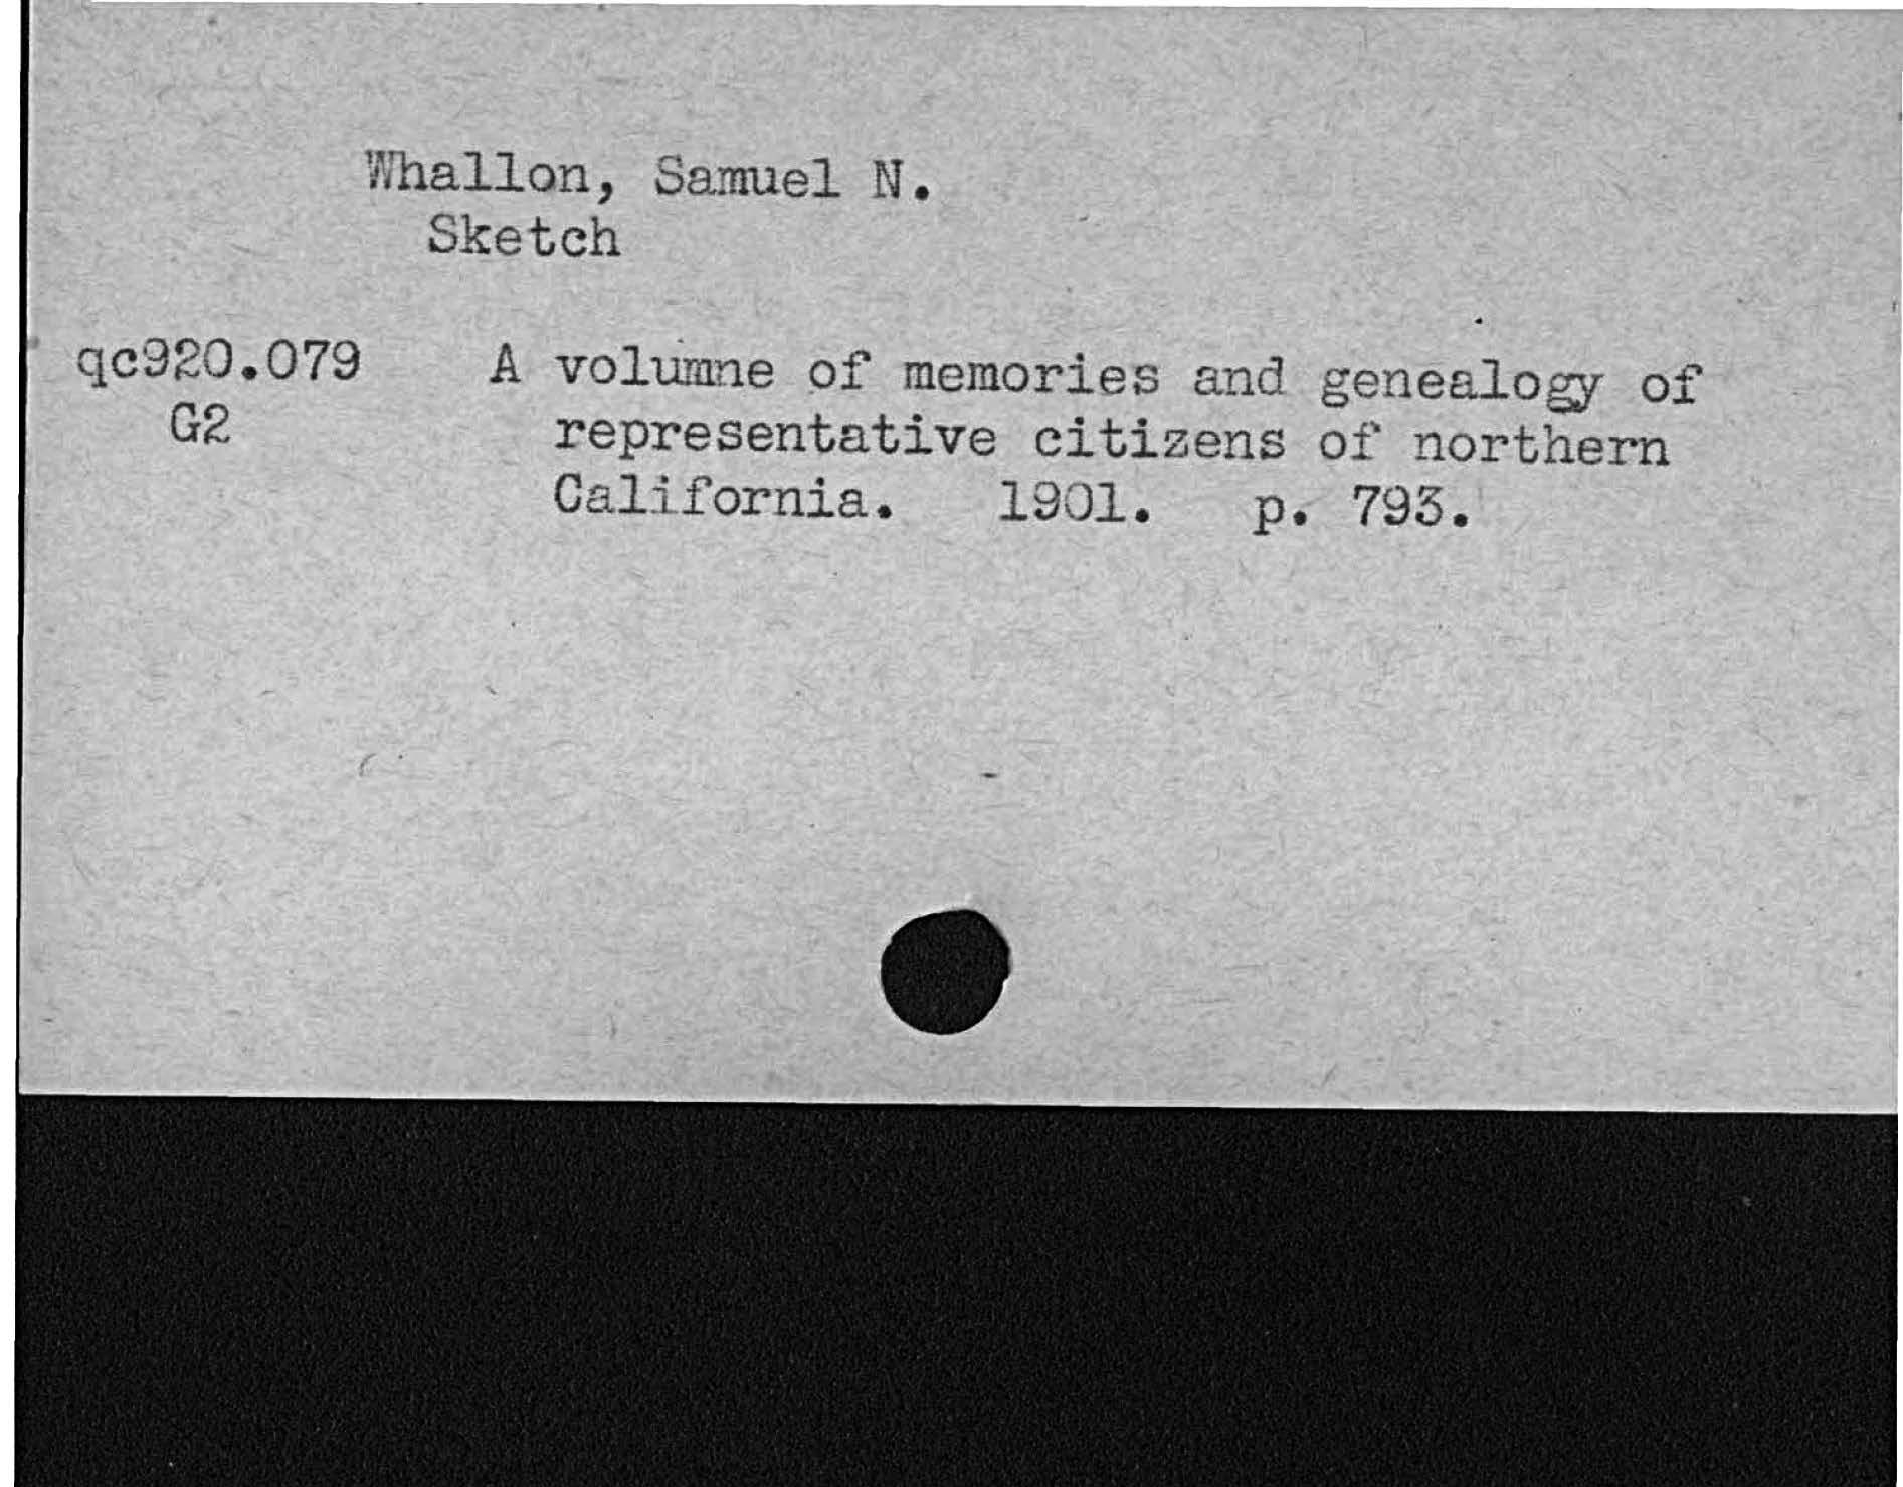 Whallon, Samuel N.SketchA volume of memories and genealogy Colrepresentative citizens of northernCalifornia. 1901 p. 793   qc320  G2  79